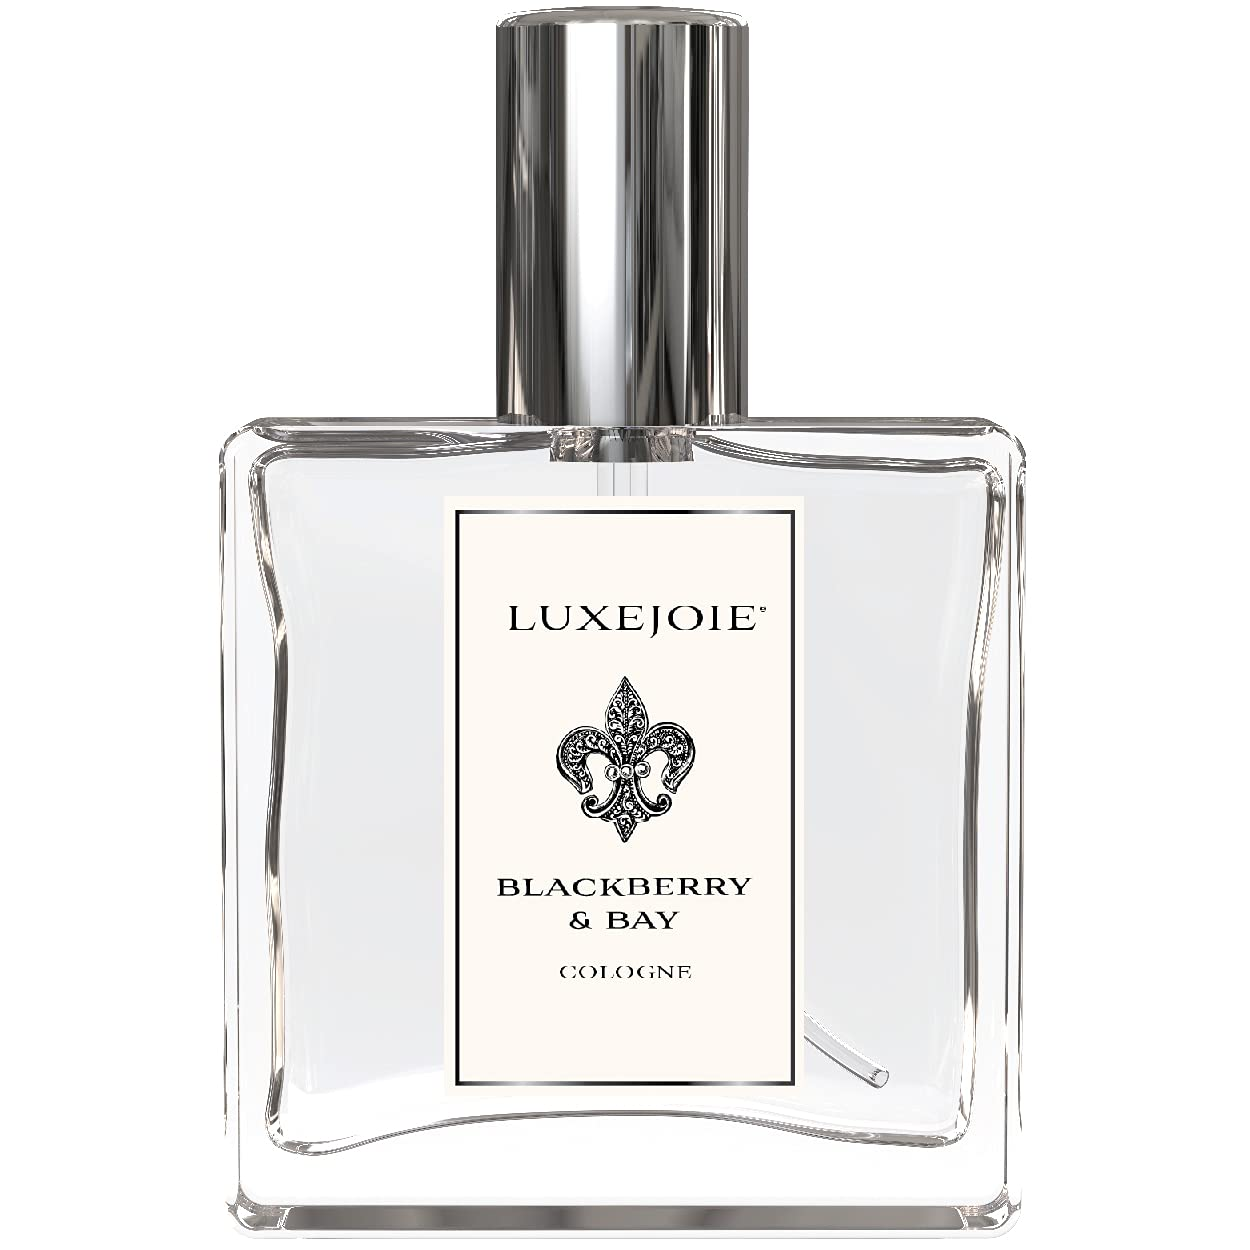 Blackberry & Bay Cologne Perfume 3.4 Oz